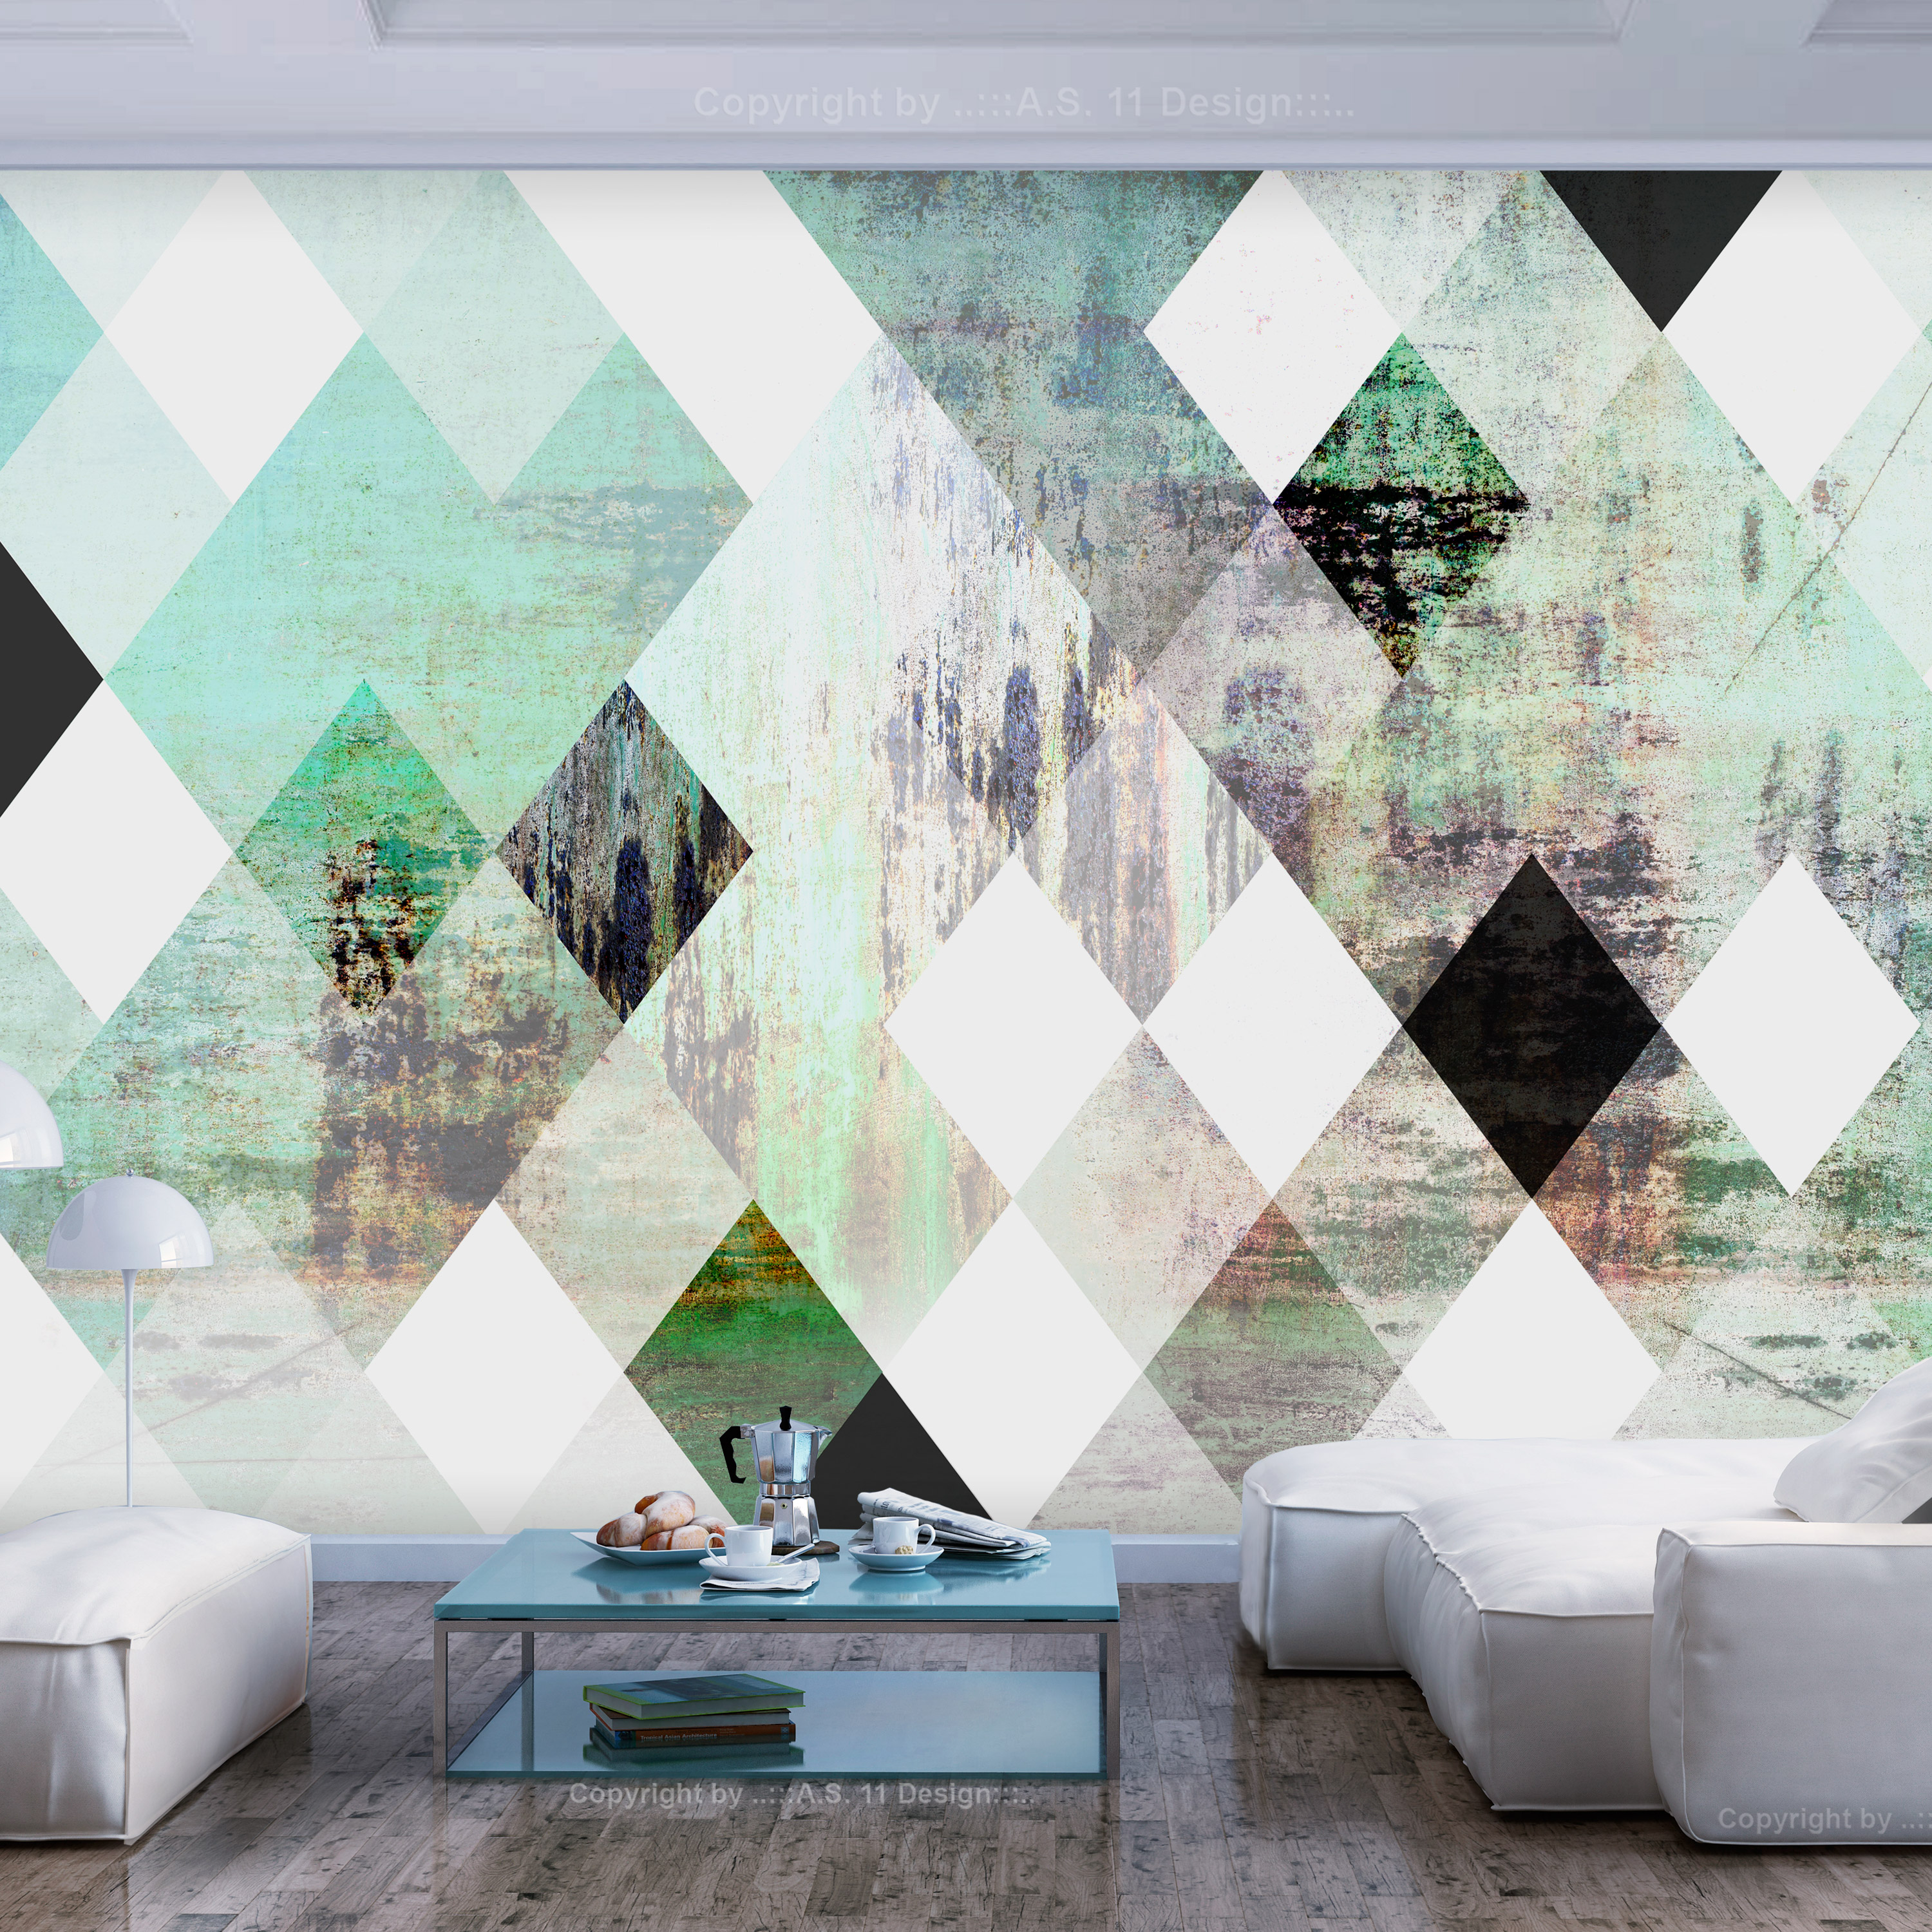 Self-adhesive Wallpaper - Rhombic Chessboard (Green) - 392x280